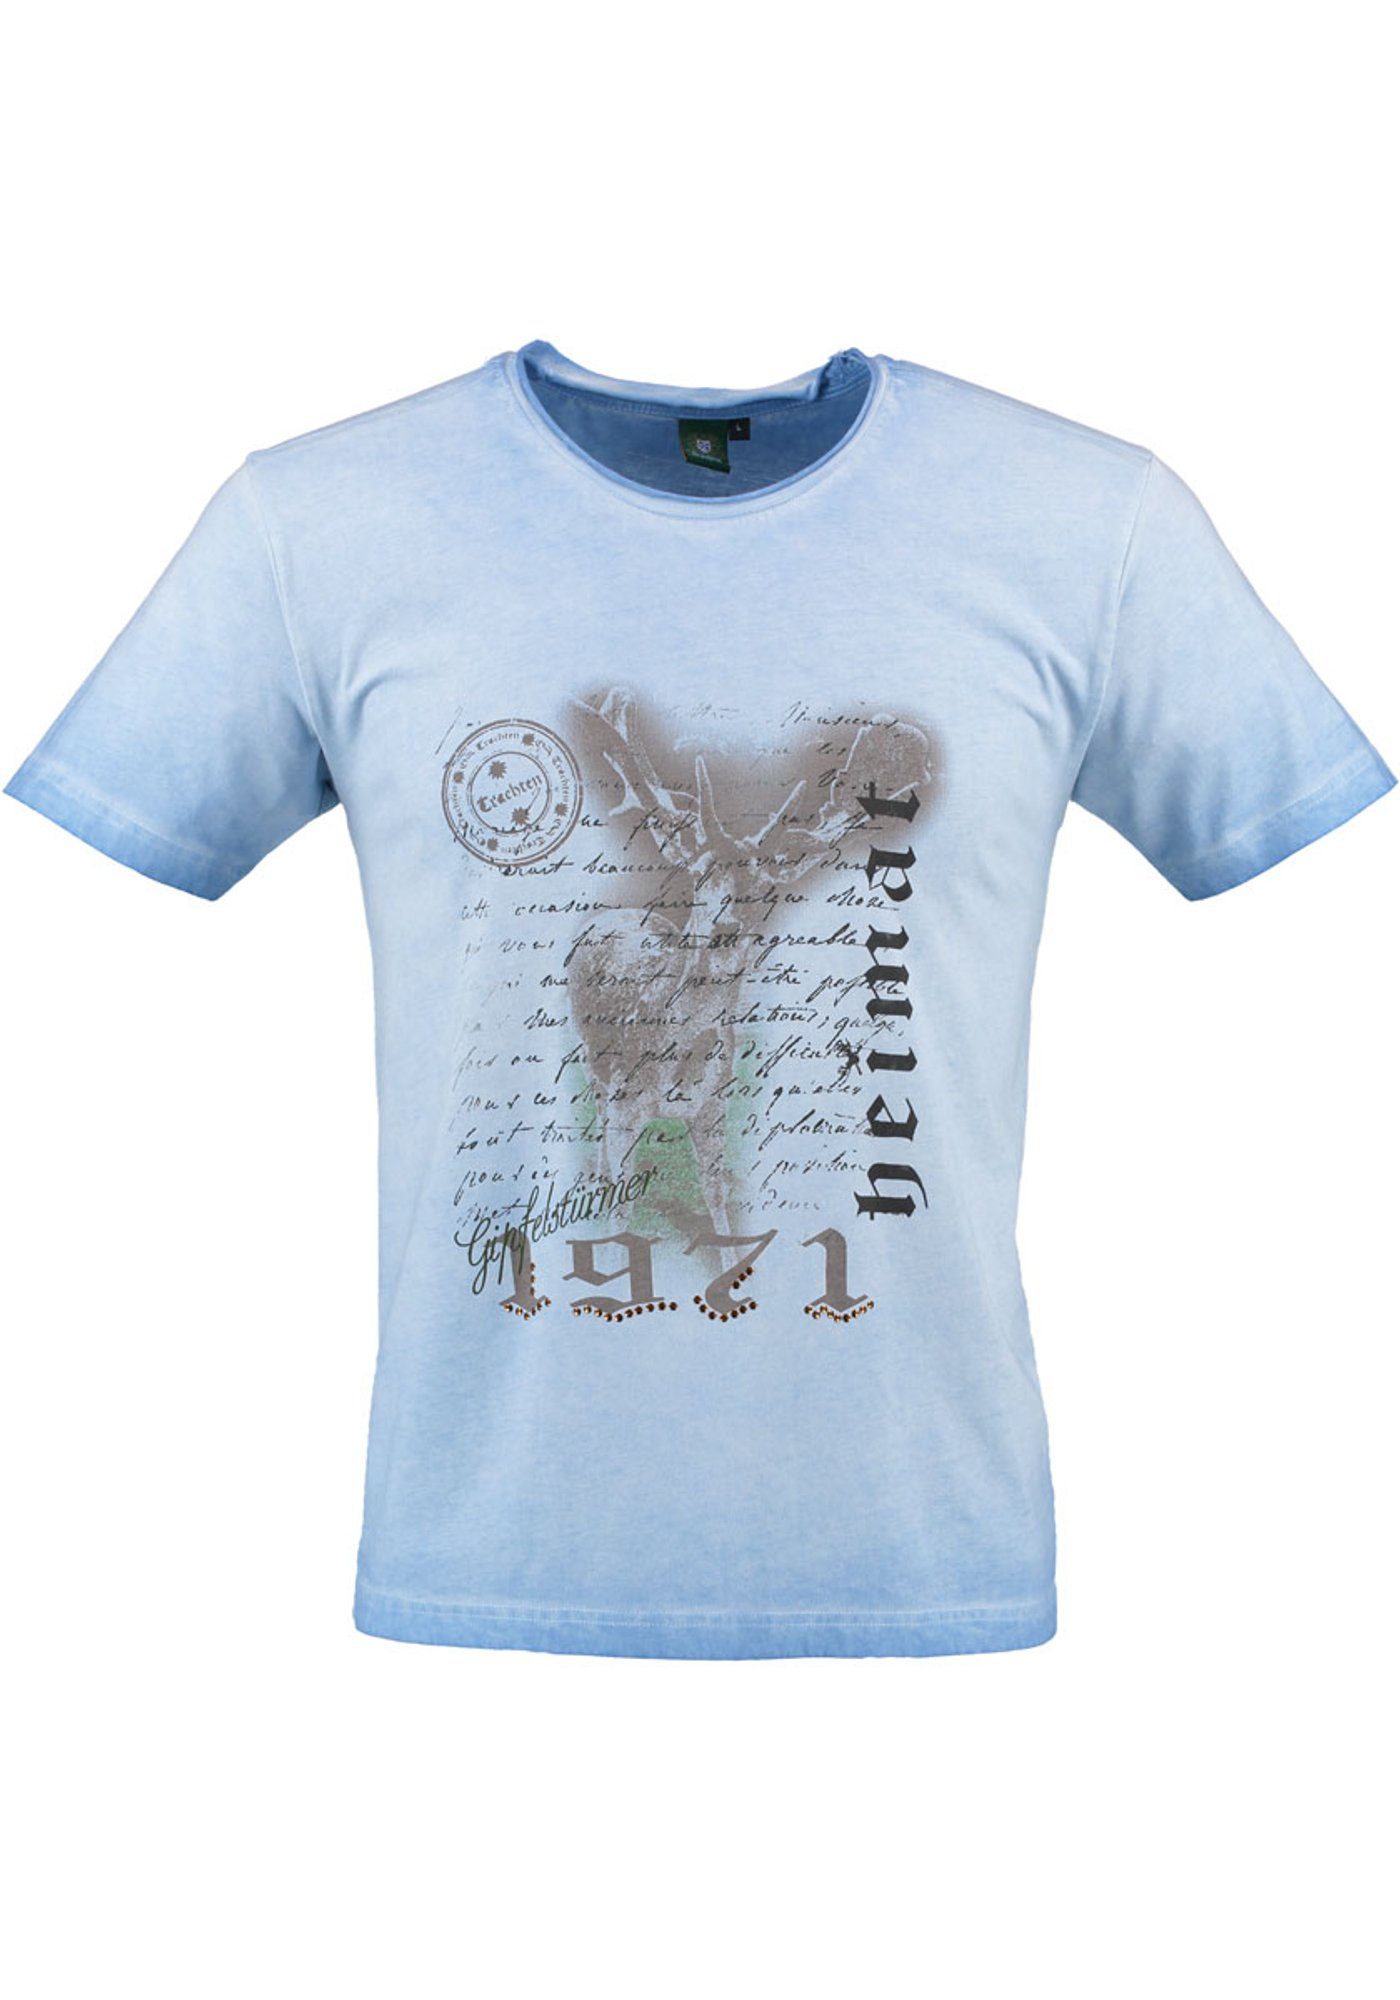 mit kornblau Motivdruck T-Shirt OS-Trachten Kurzarm Ofapuo Trachtenshirt